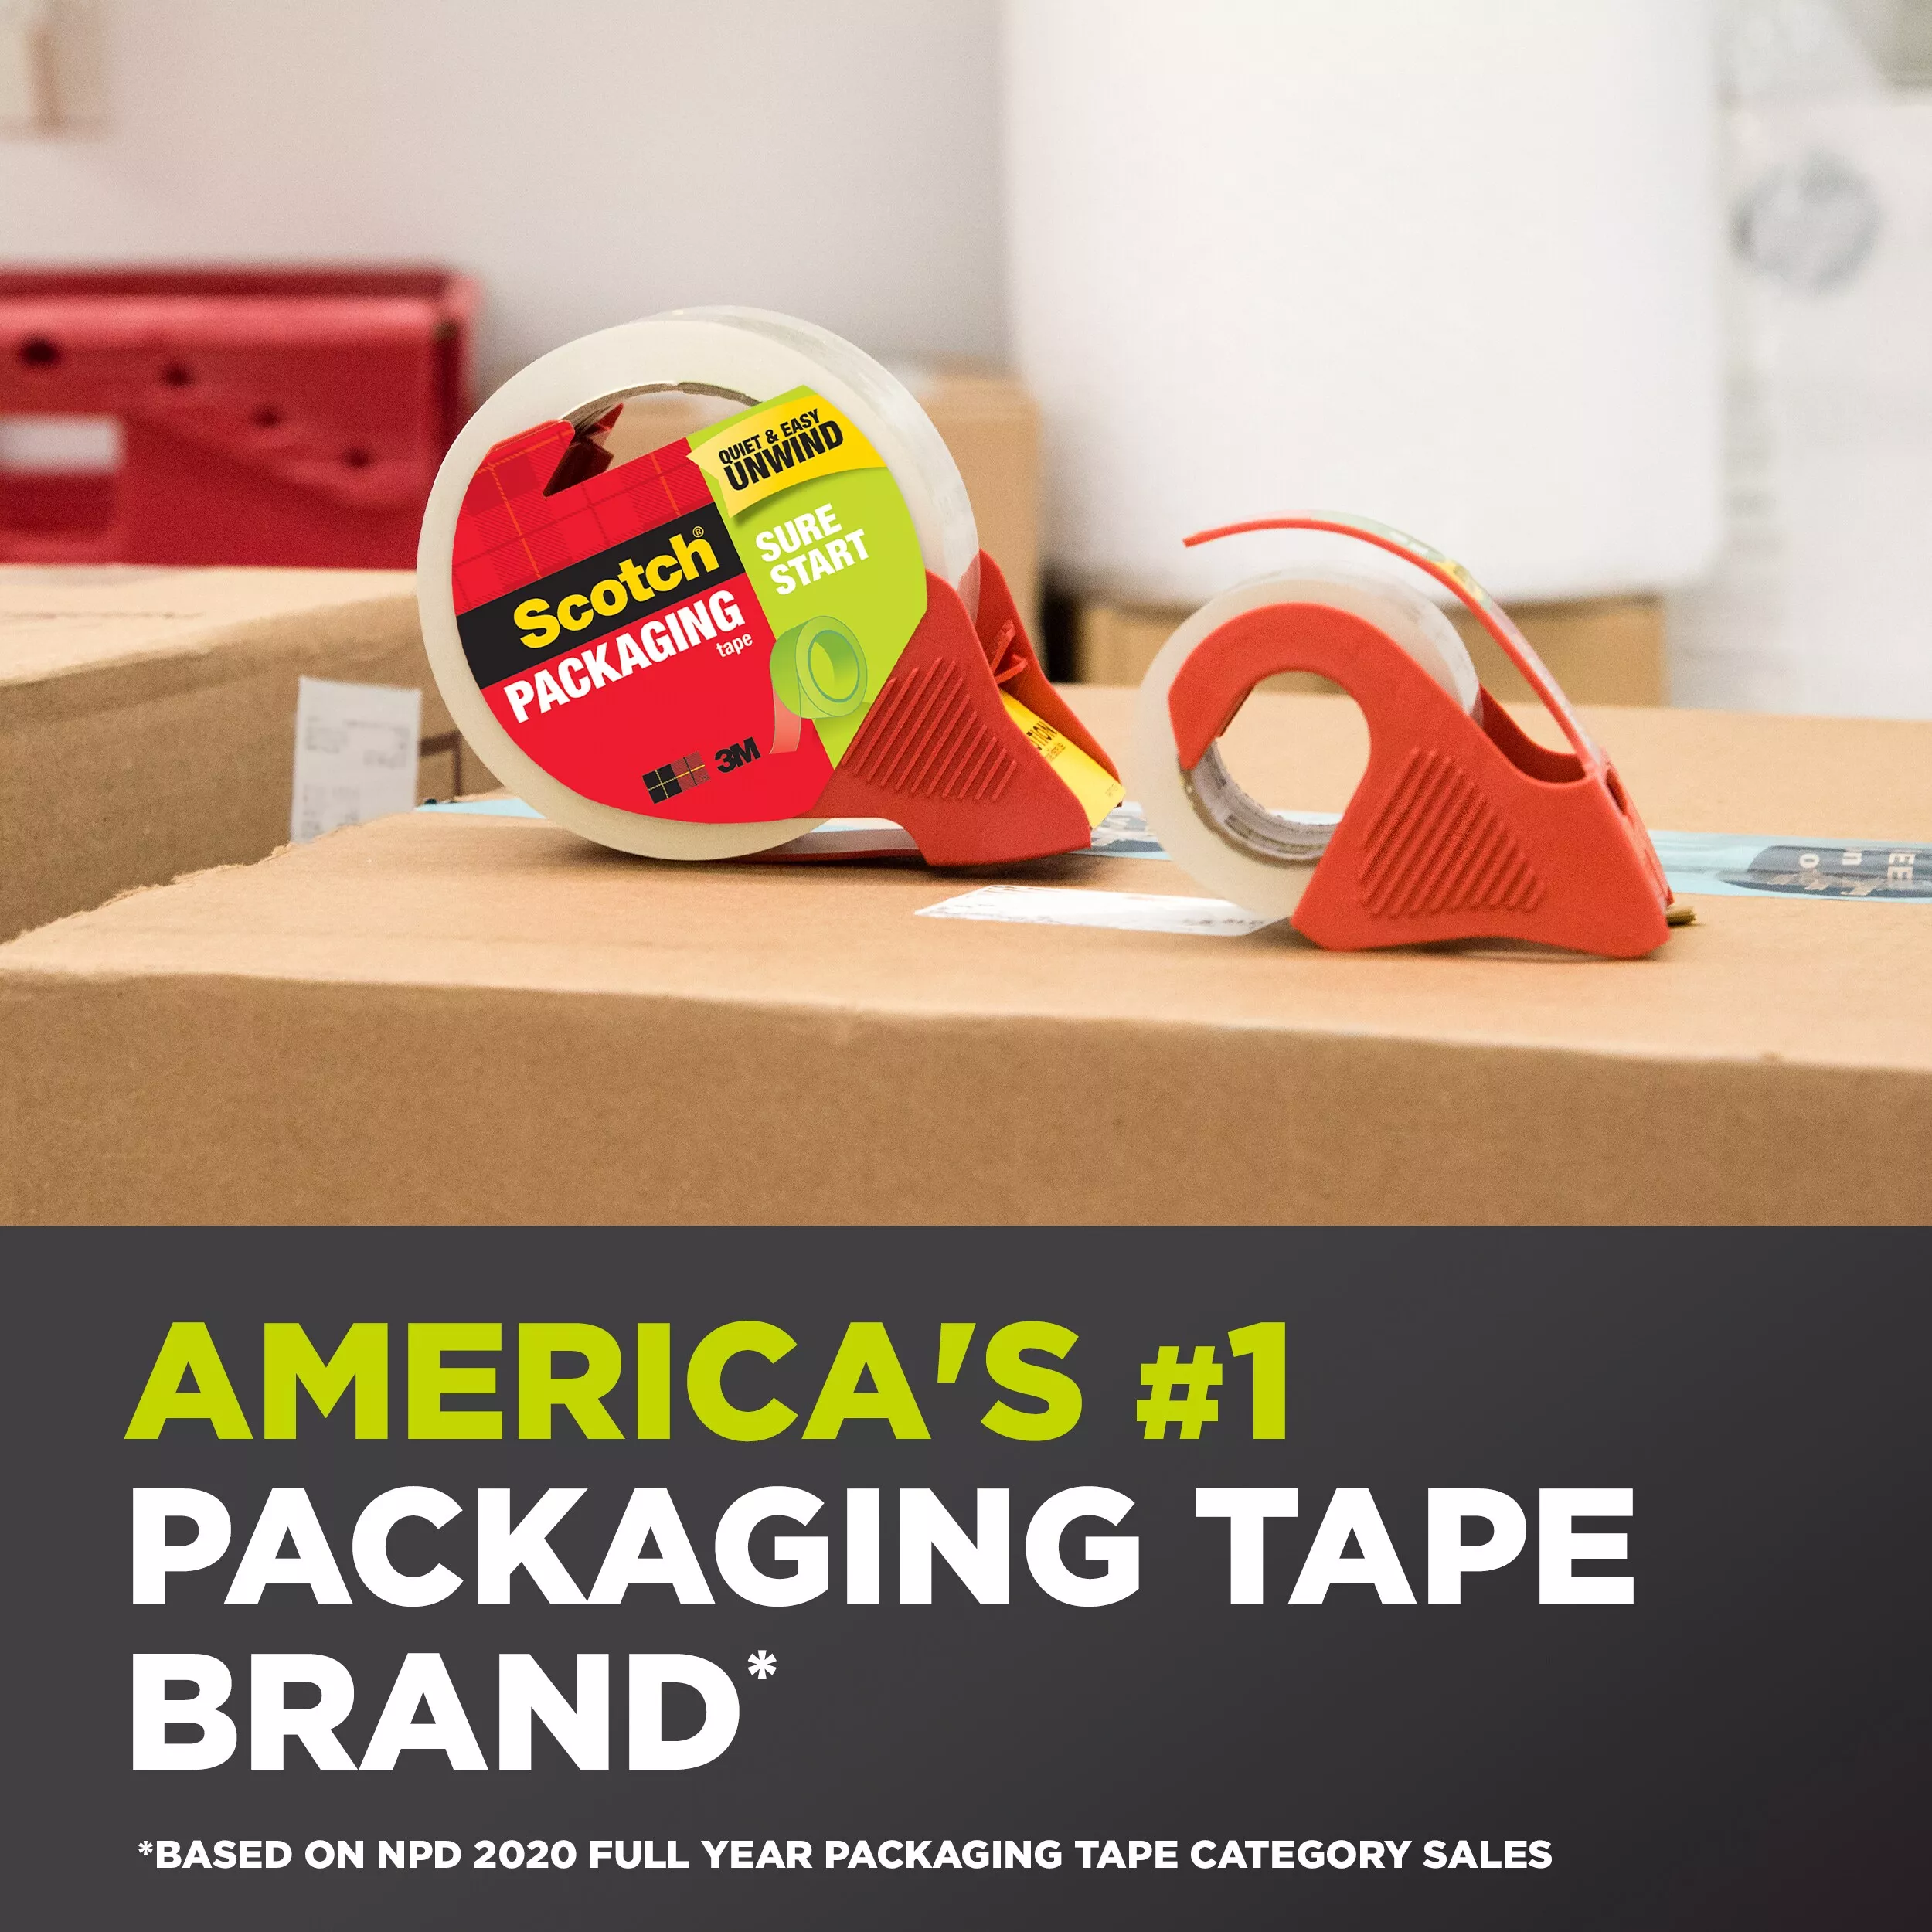 SKU 7010412624 | Scotch® Sure Start Packaging Tape